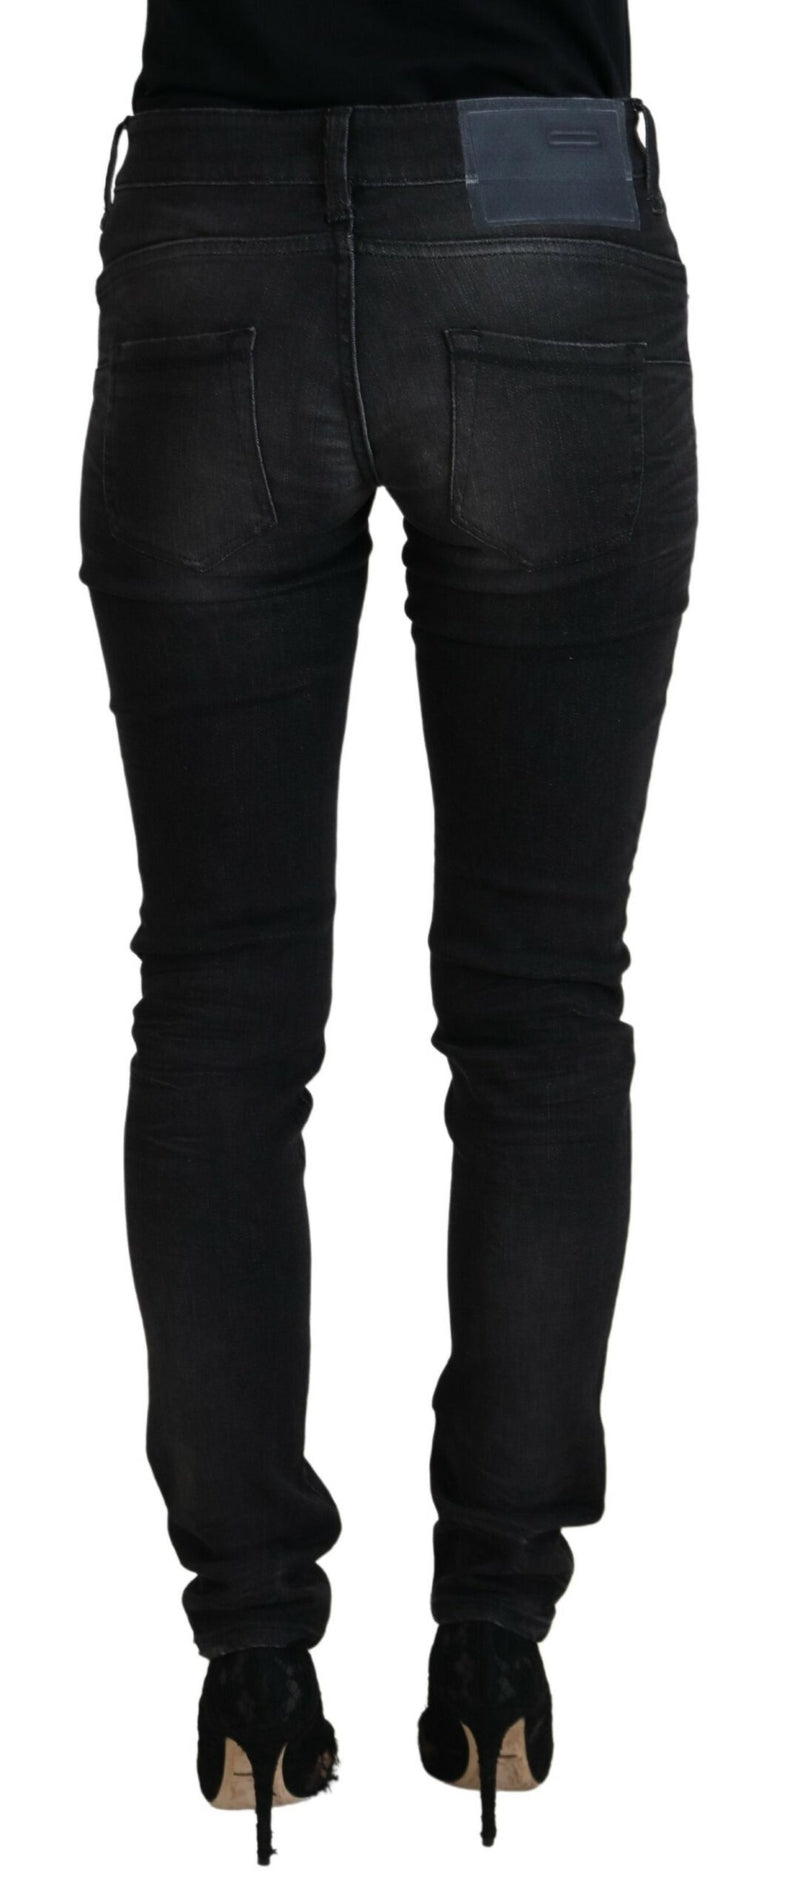 Acht Chic Black Low Waist Straight Leg Women's Jeans